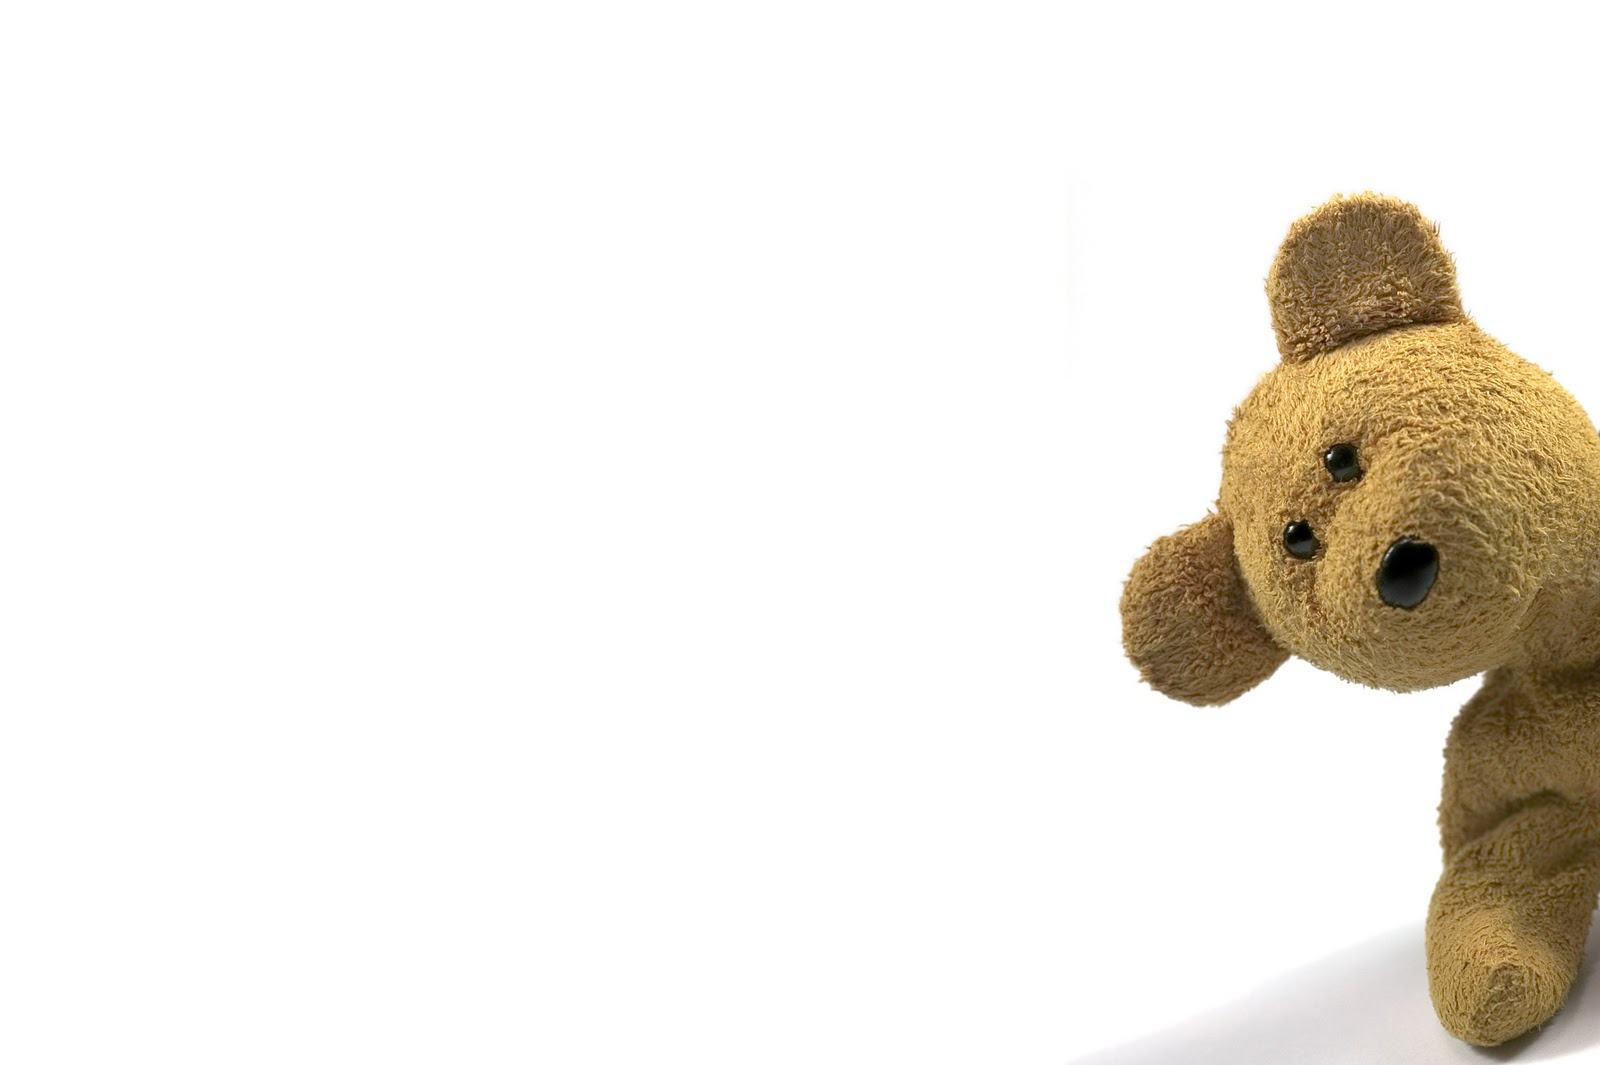 mobile desktop background cute teddy bear cartoon pics download